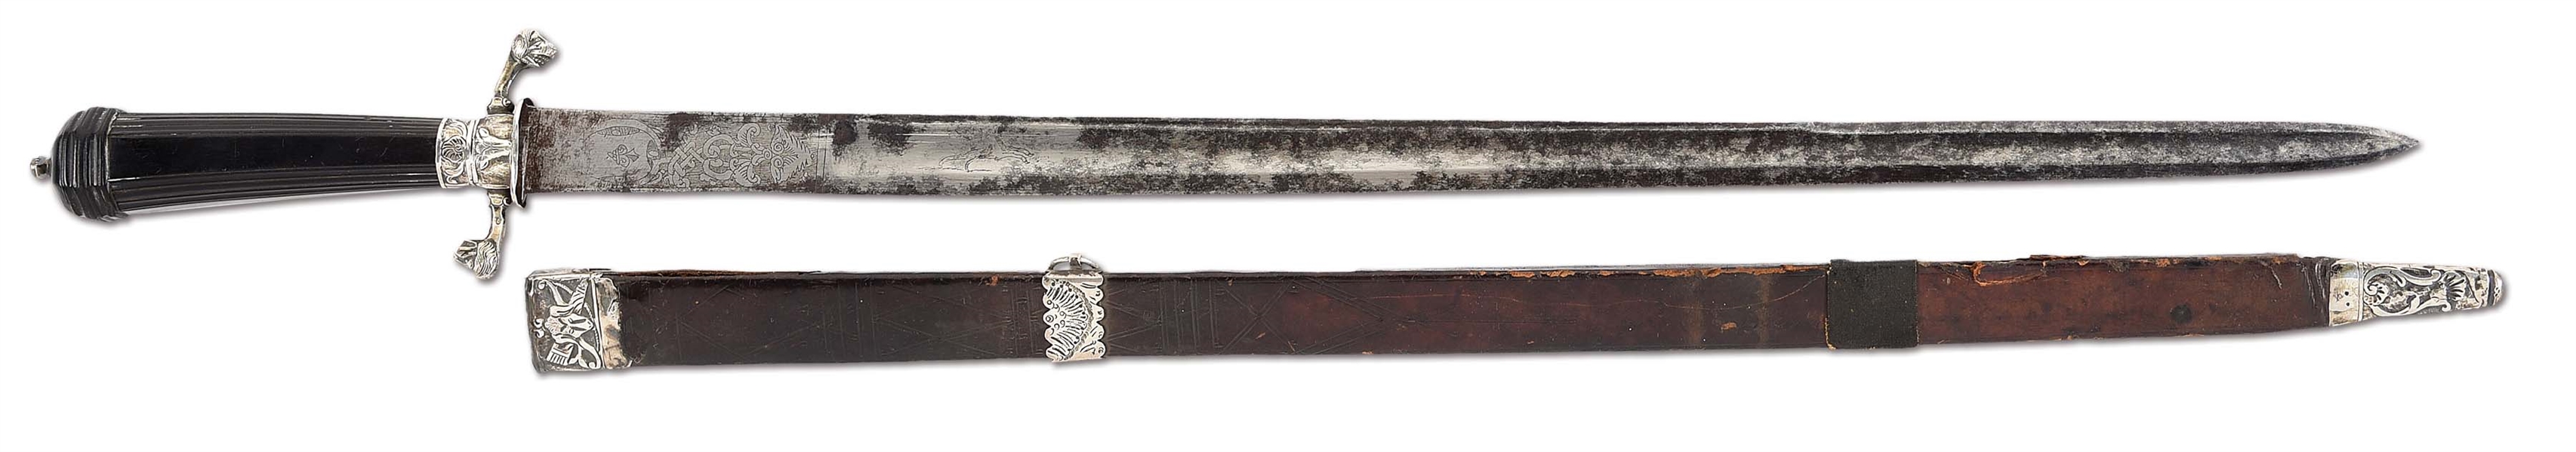 FINE 18TH CENTURY ENGLISH SILVER HILT SMALL SWORD.